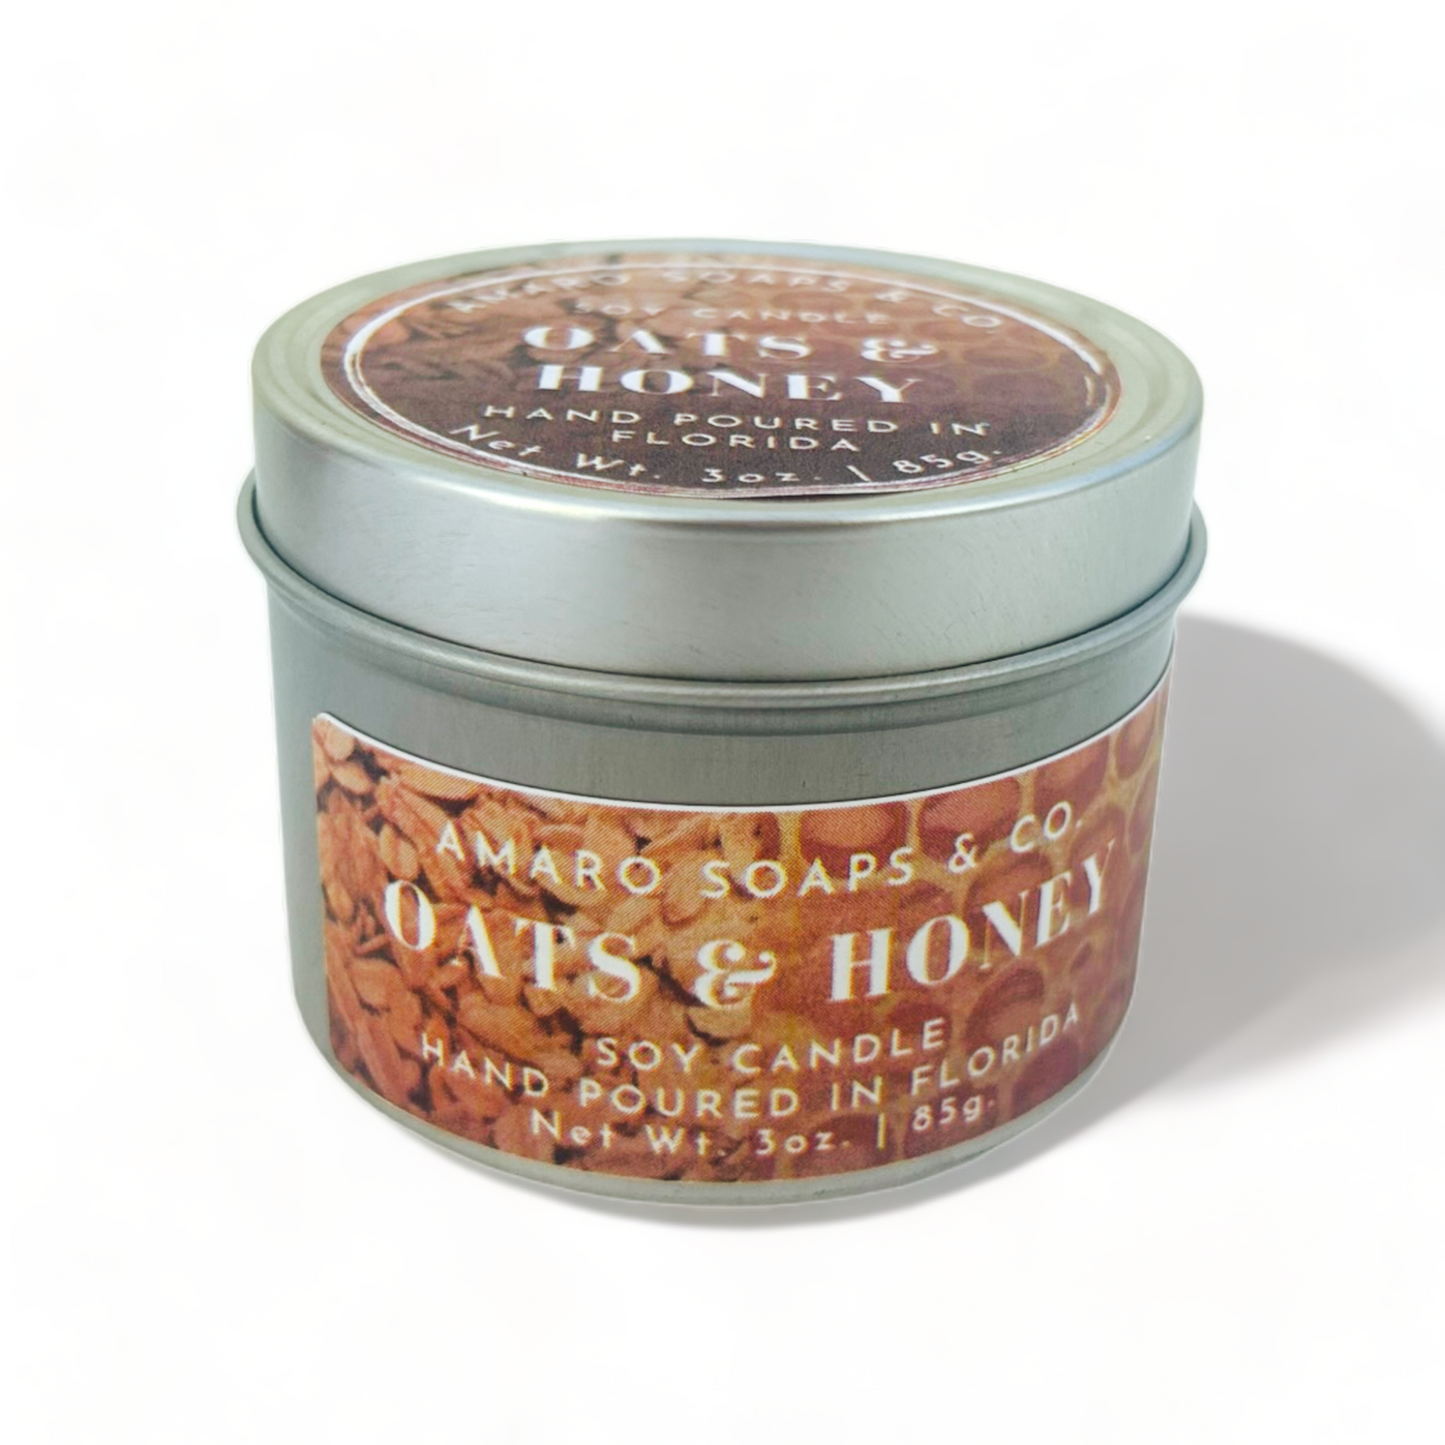 Oats & Honey Soy Candle Tin